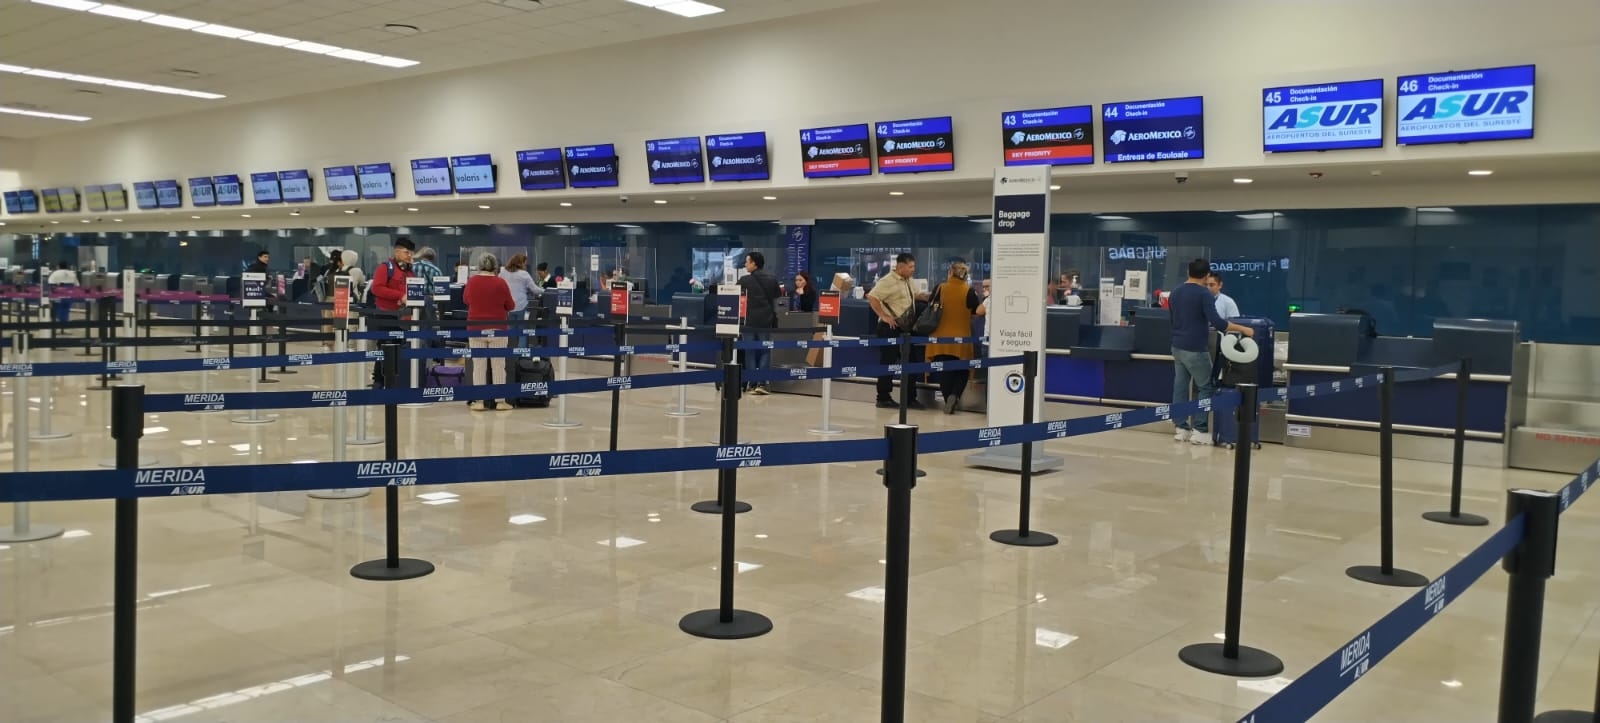 Aeroméxico opera sin vuelos cancelados en el aeropuerto de Mérida por segundo día consecutivo